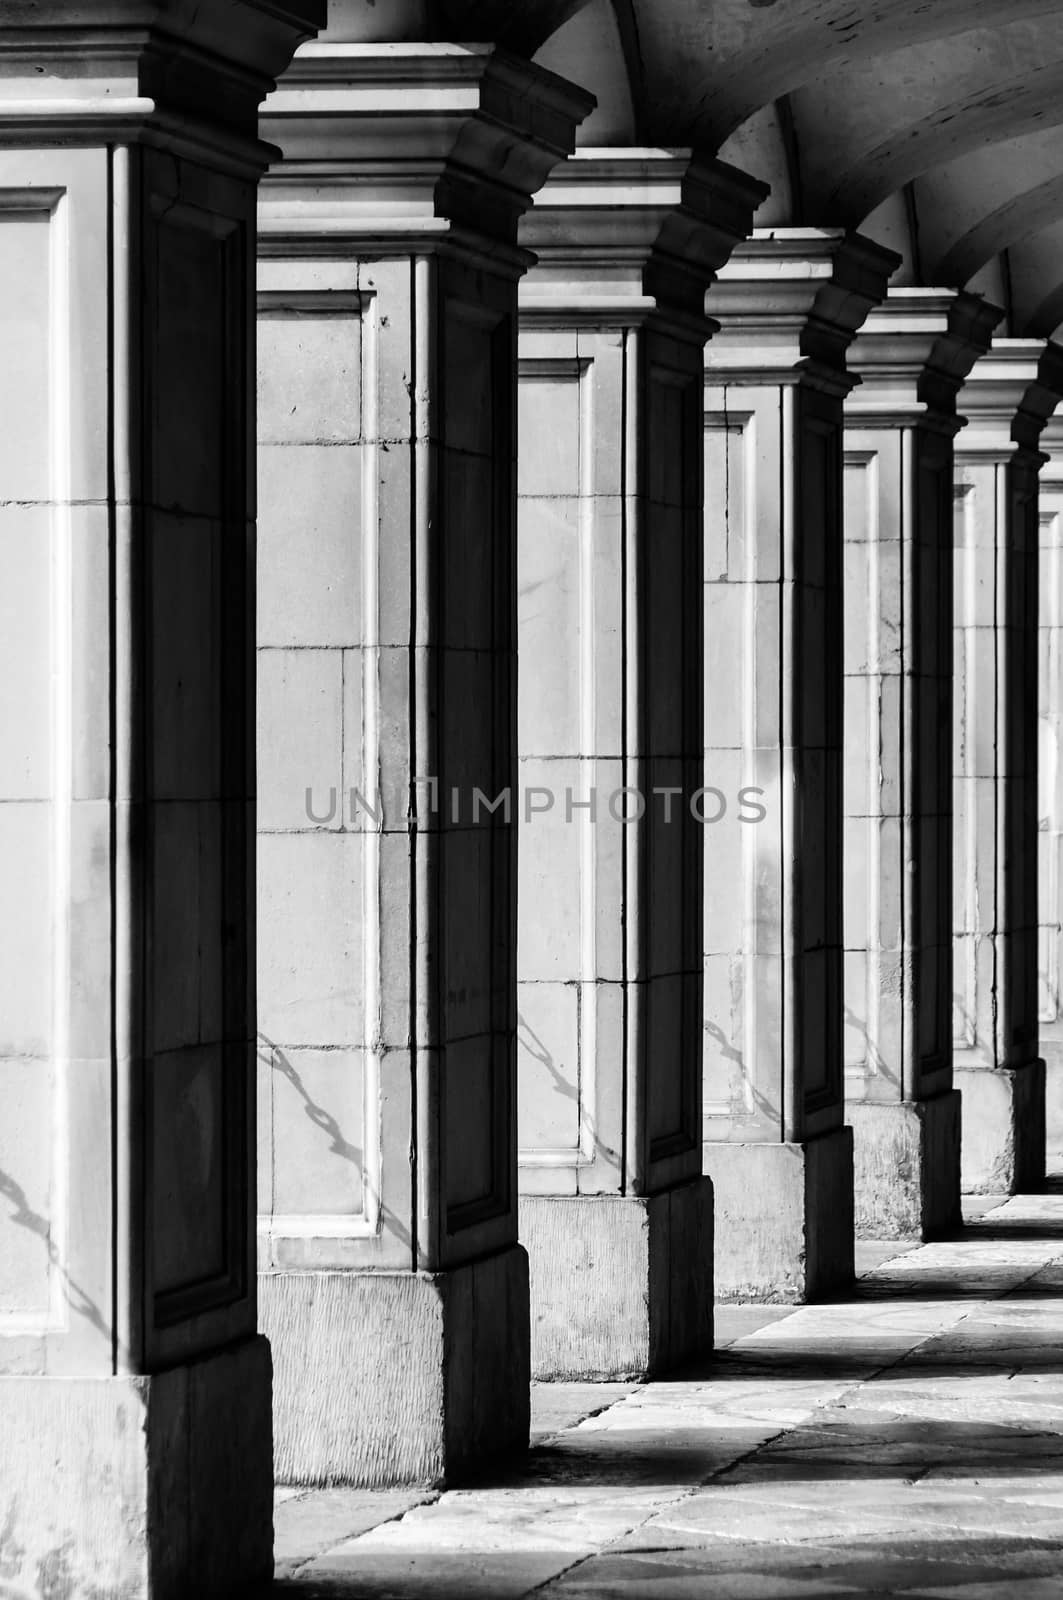 Square columns in black and white